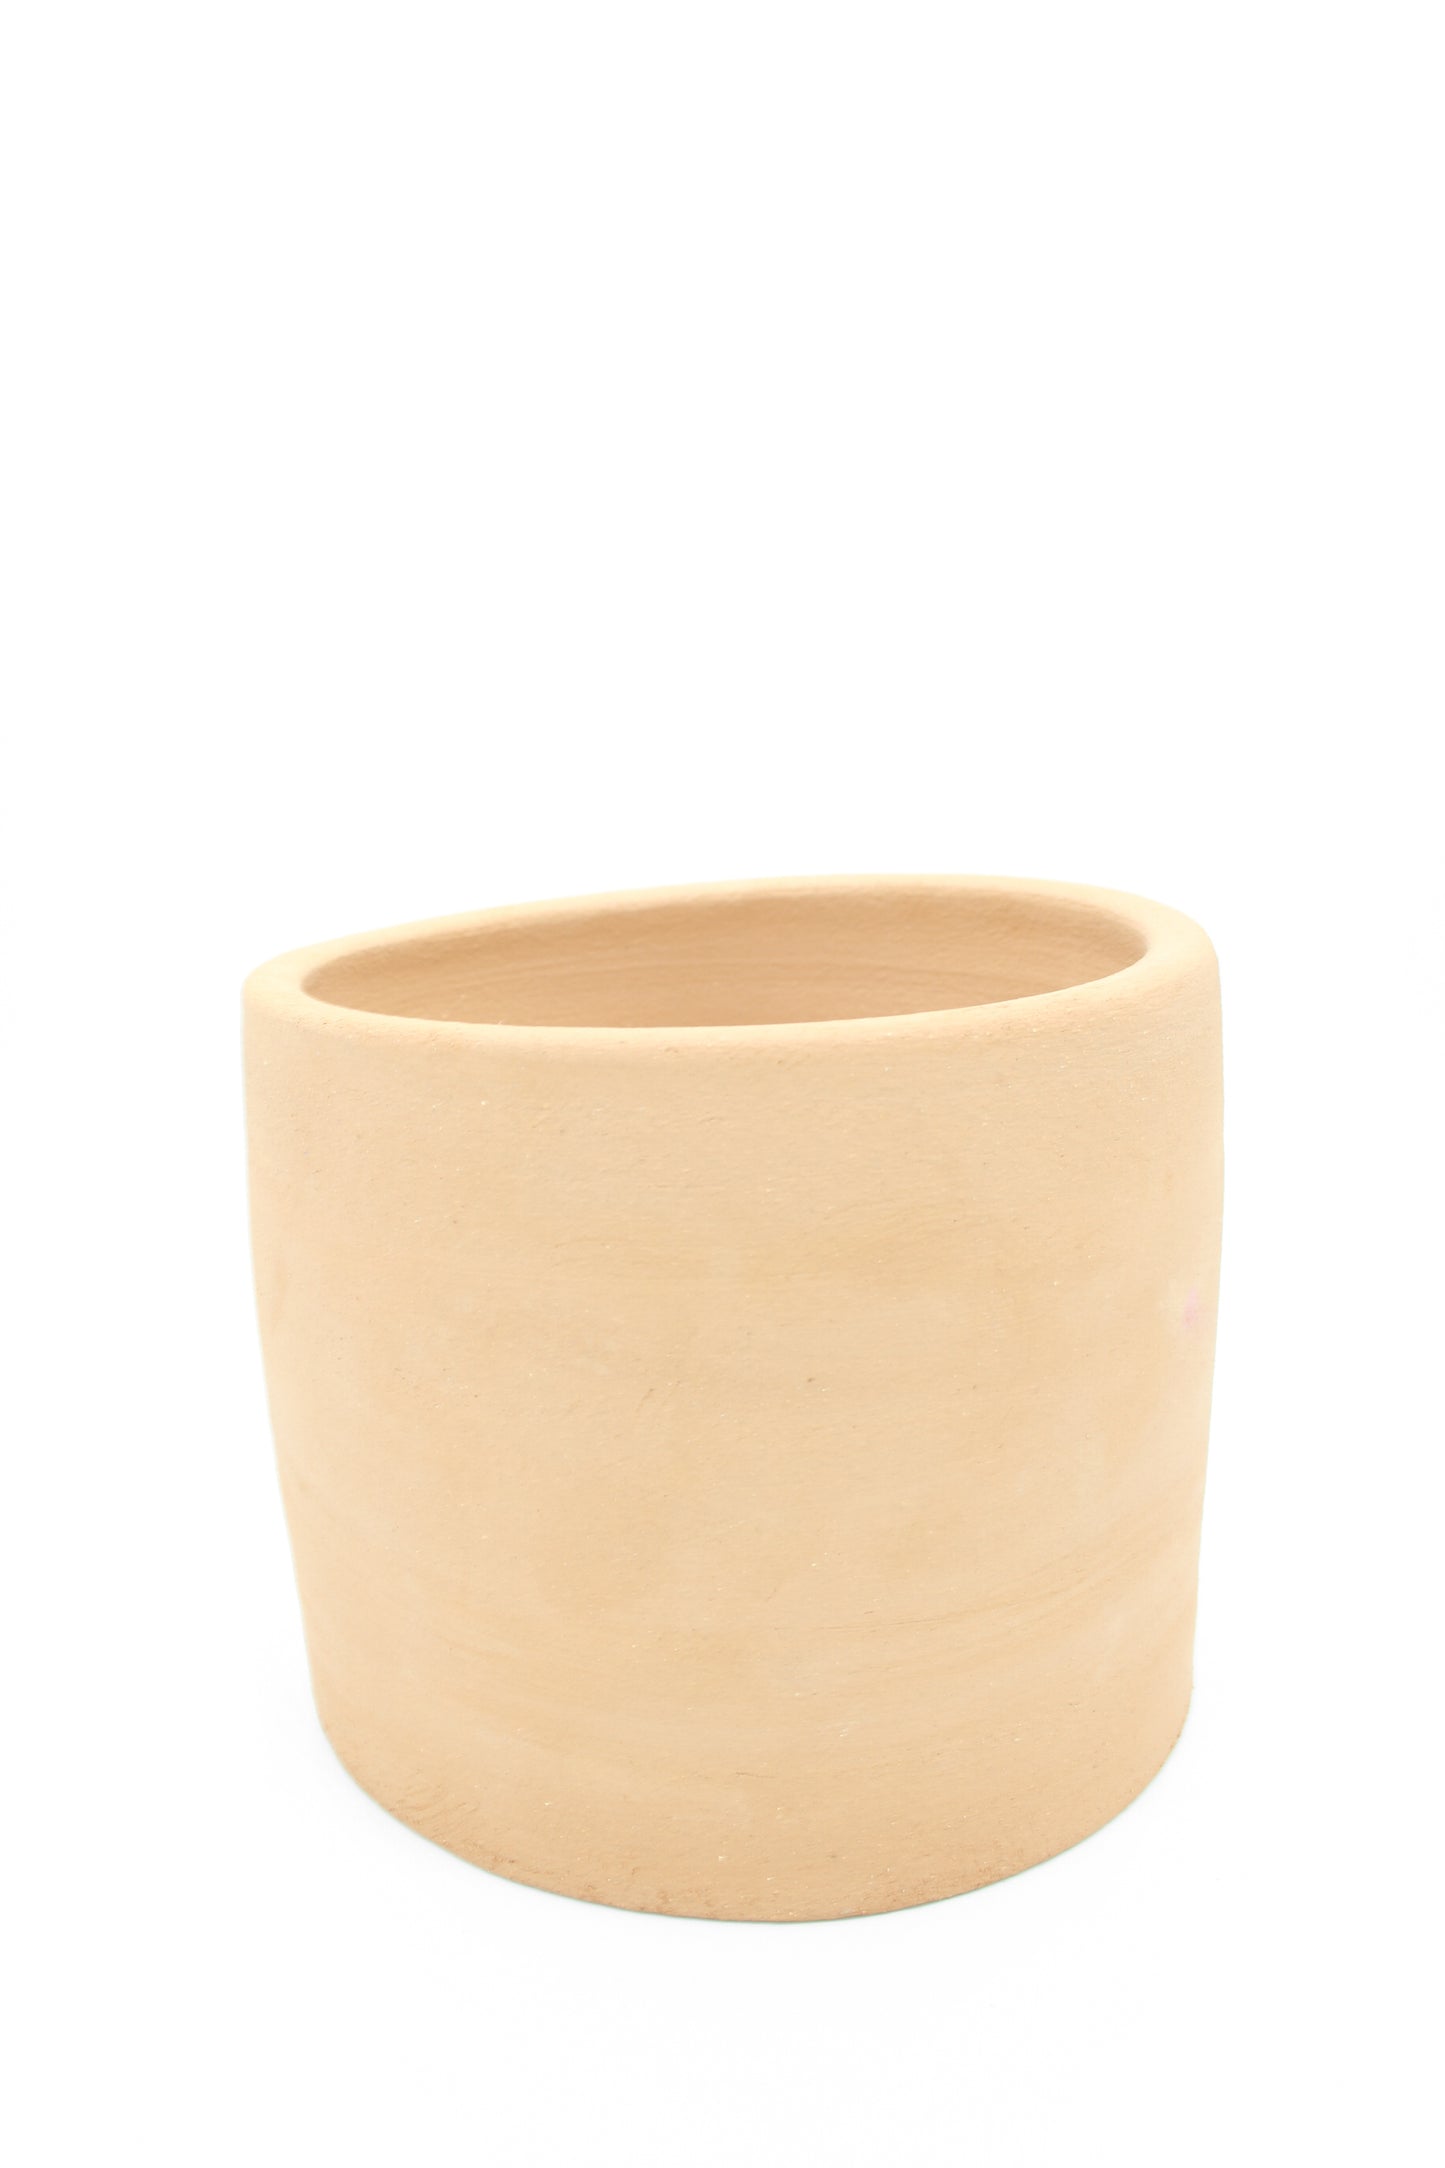 Planter - Handmade Stoneware